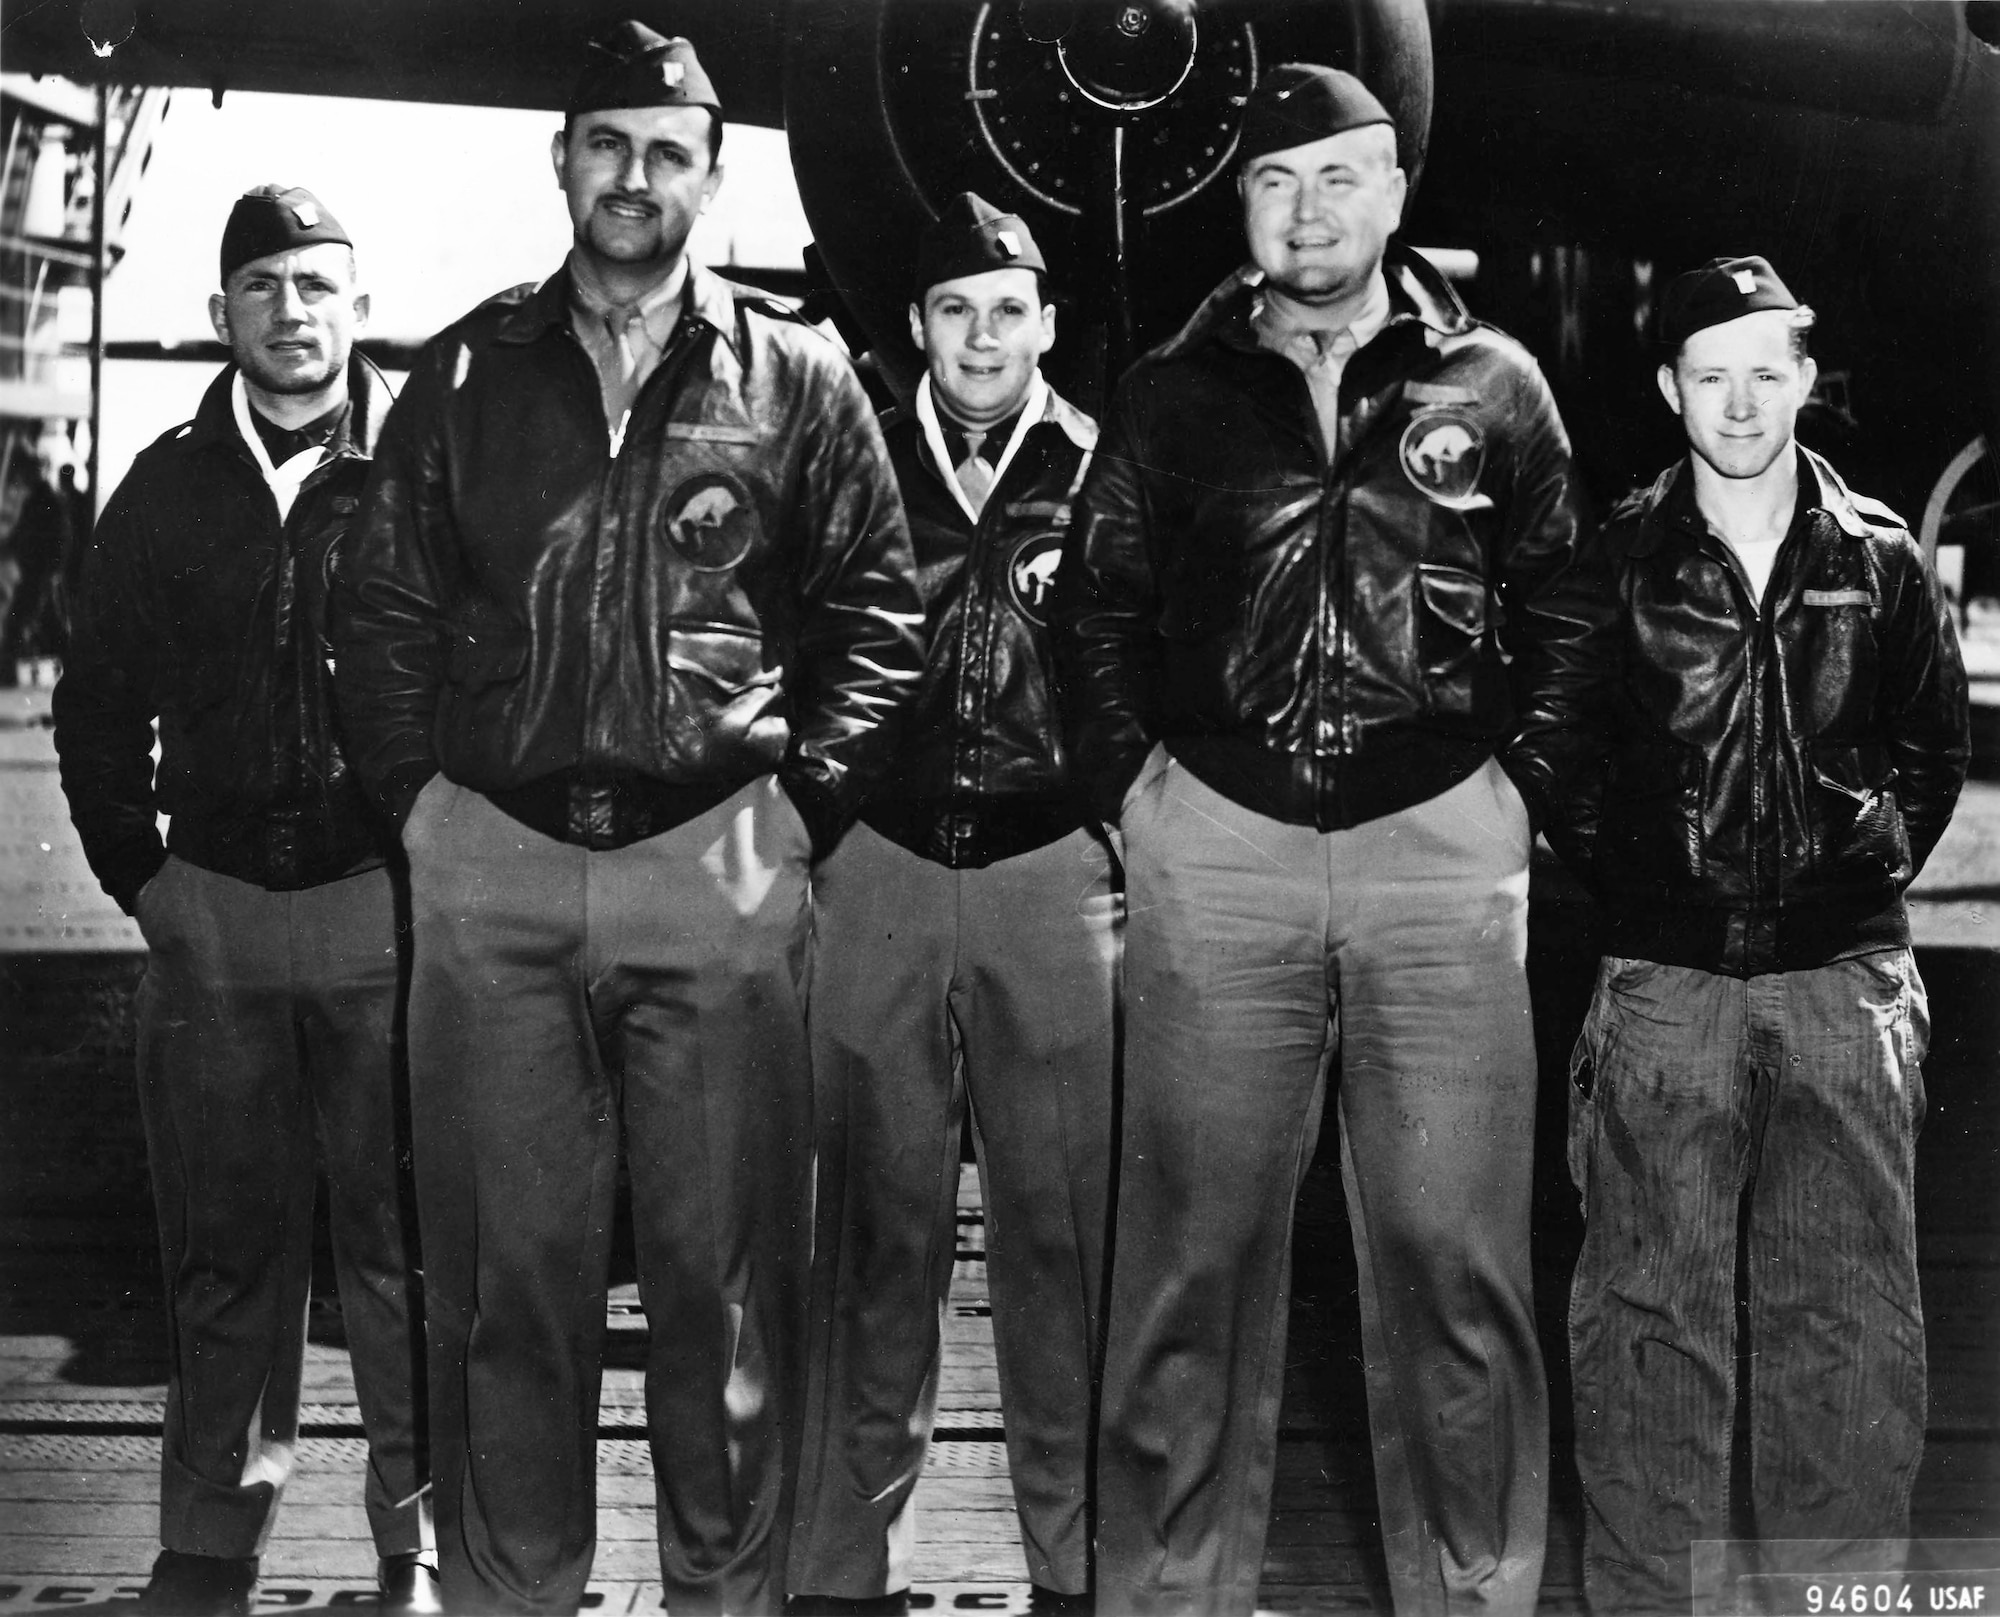 The Oregonians of the Doolittle Raid on Japan, April 18, 1942